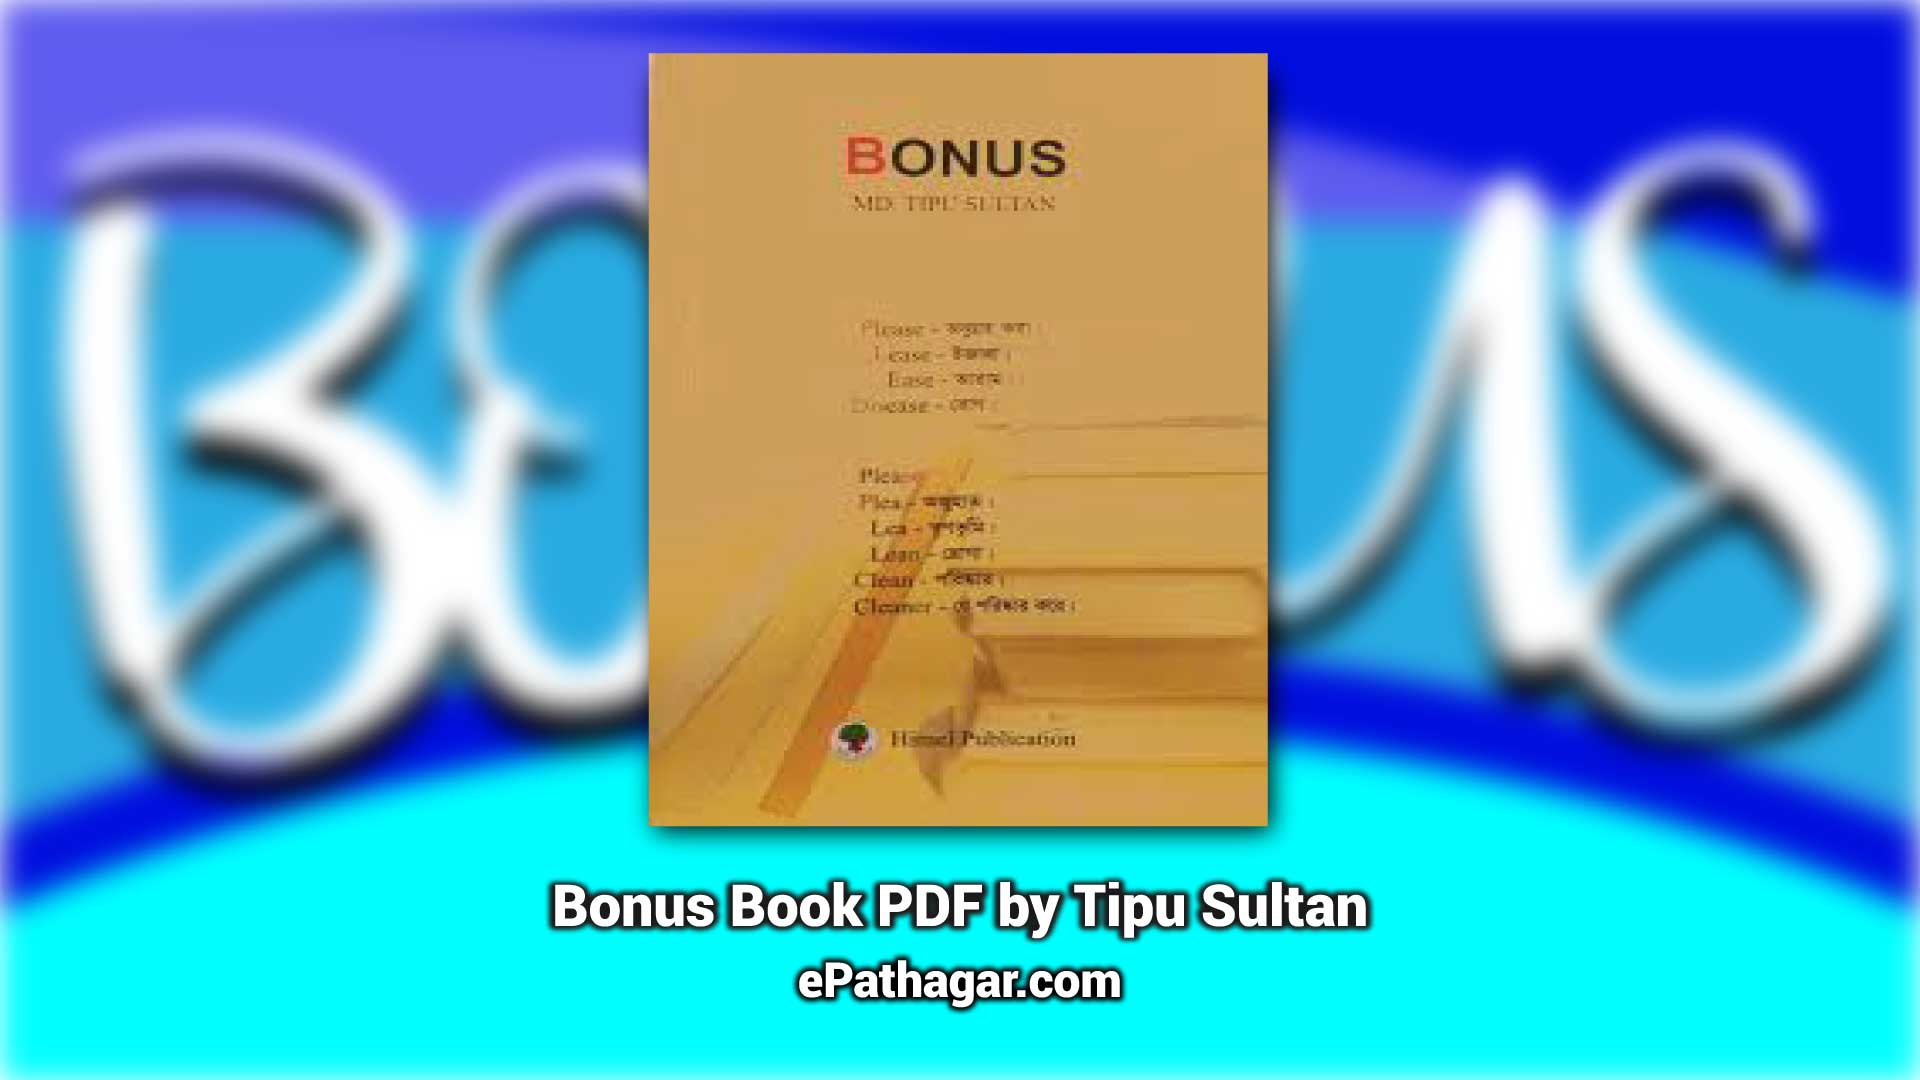 Bonus Book PDF by Tipu Sultan Free Download - ePathagar